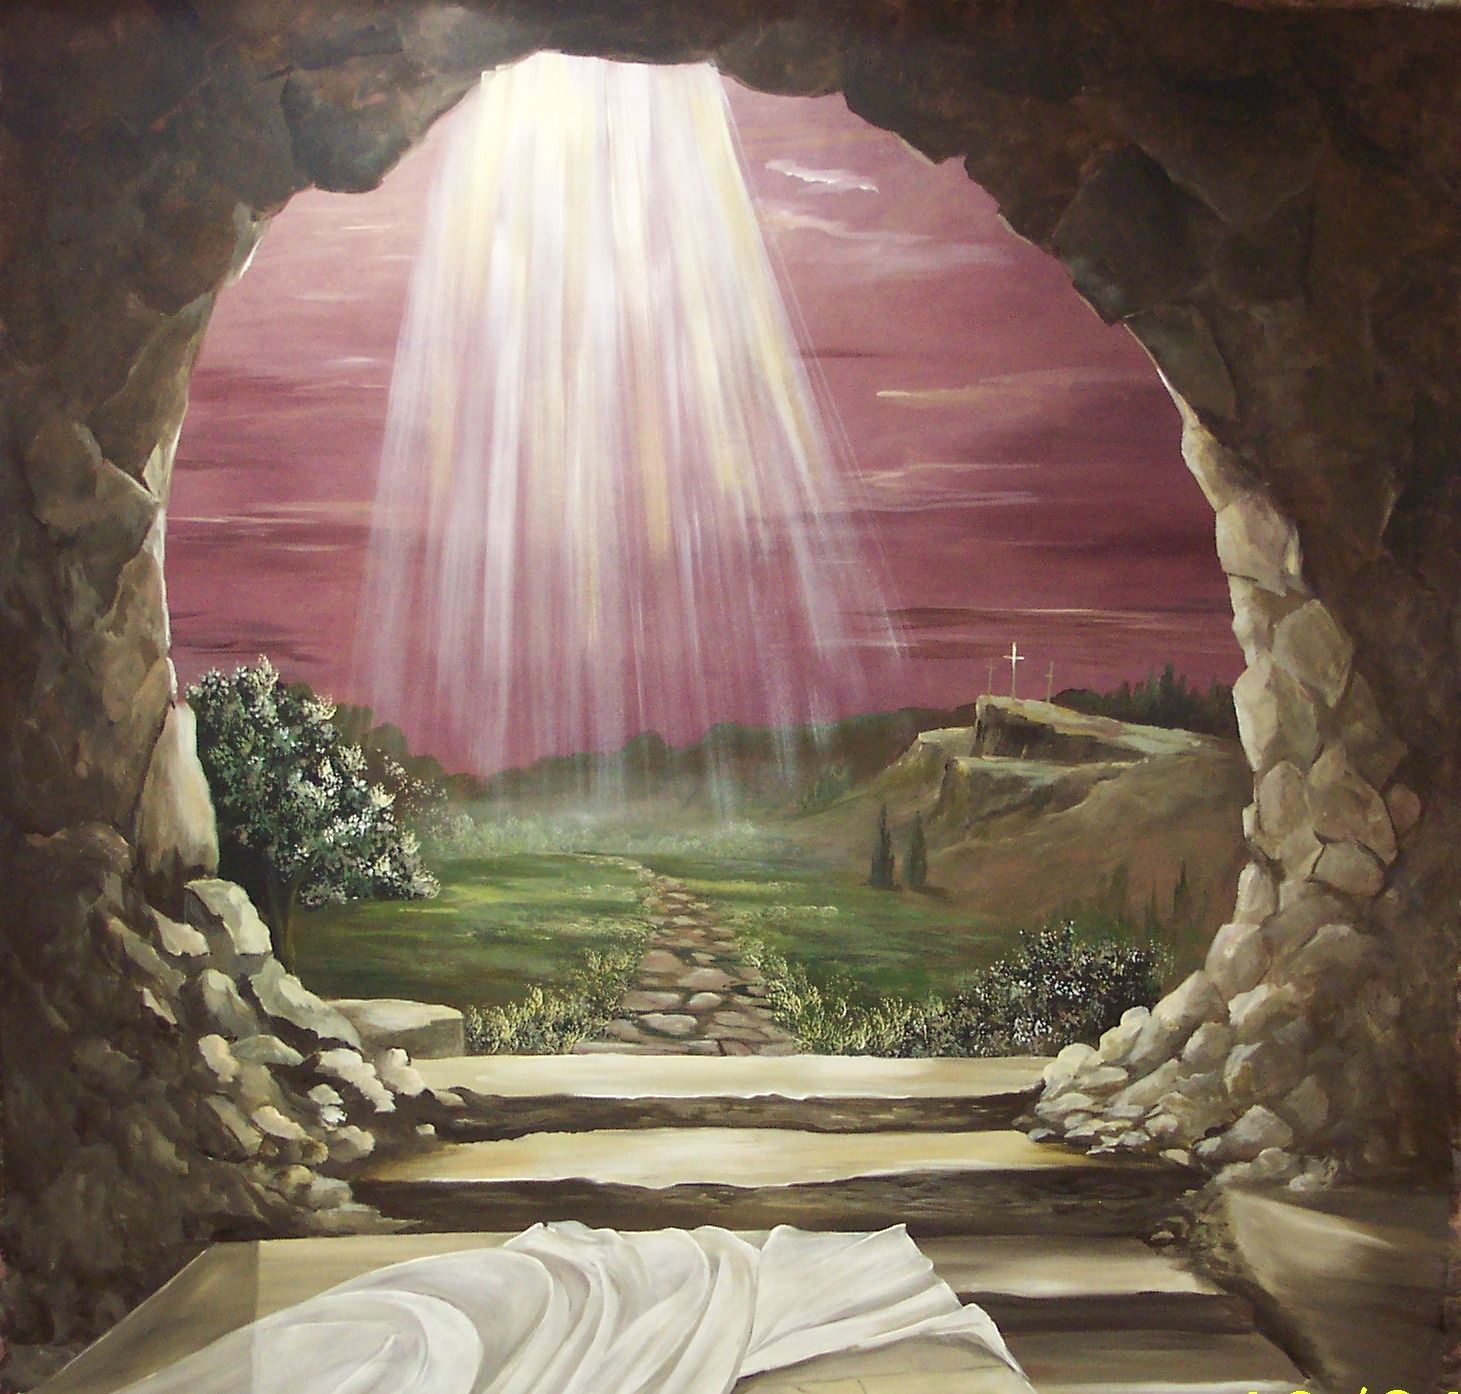 The Resurrection of Jesus. Resurrection day, Why we celebrate easter, Jesus resurrection